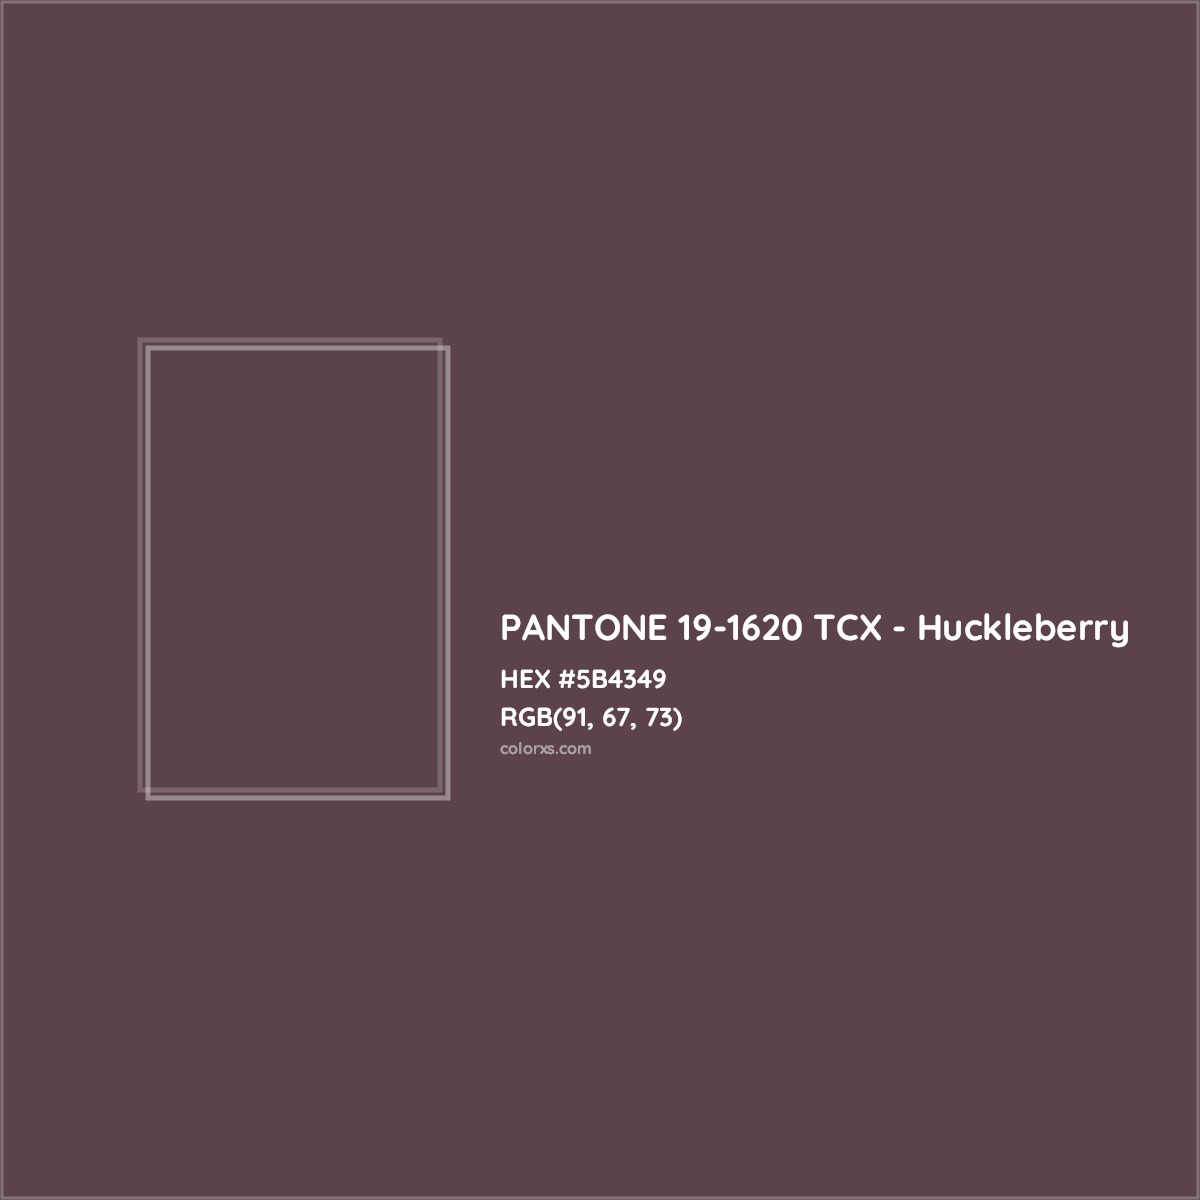 HEX #5B4349 PANTONE 19-1620 TCX - Huckleberry CMS Pantone TCX - Color Code